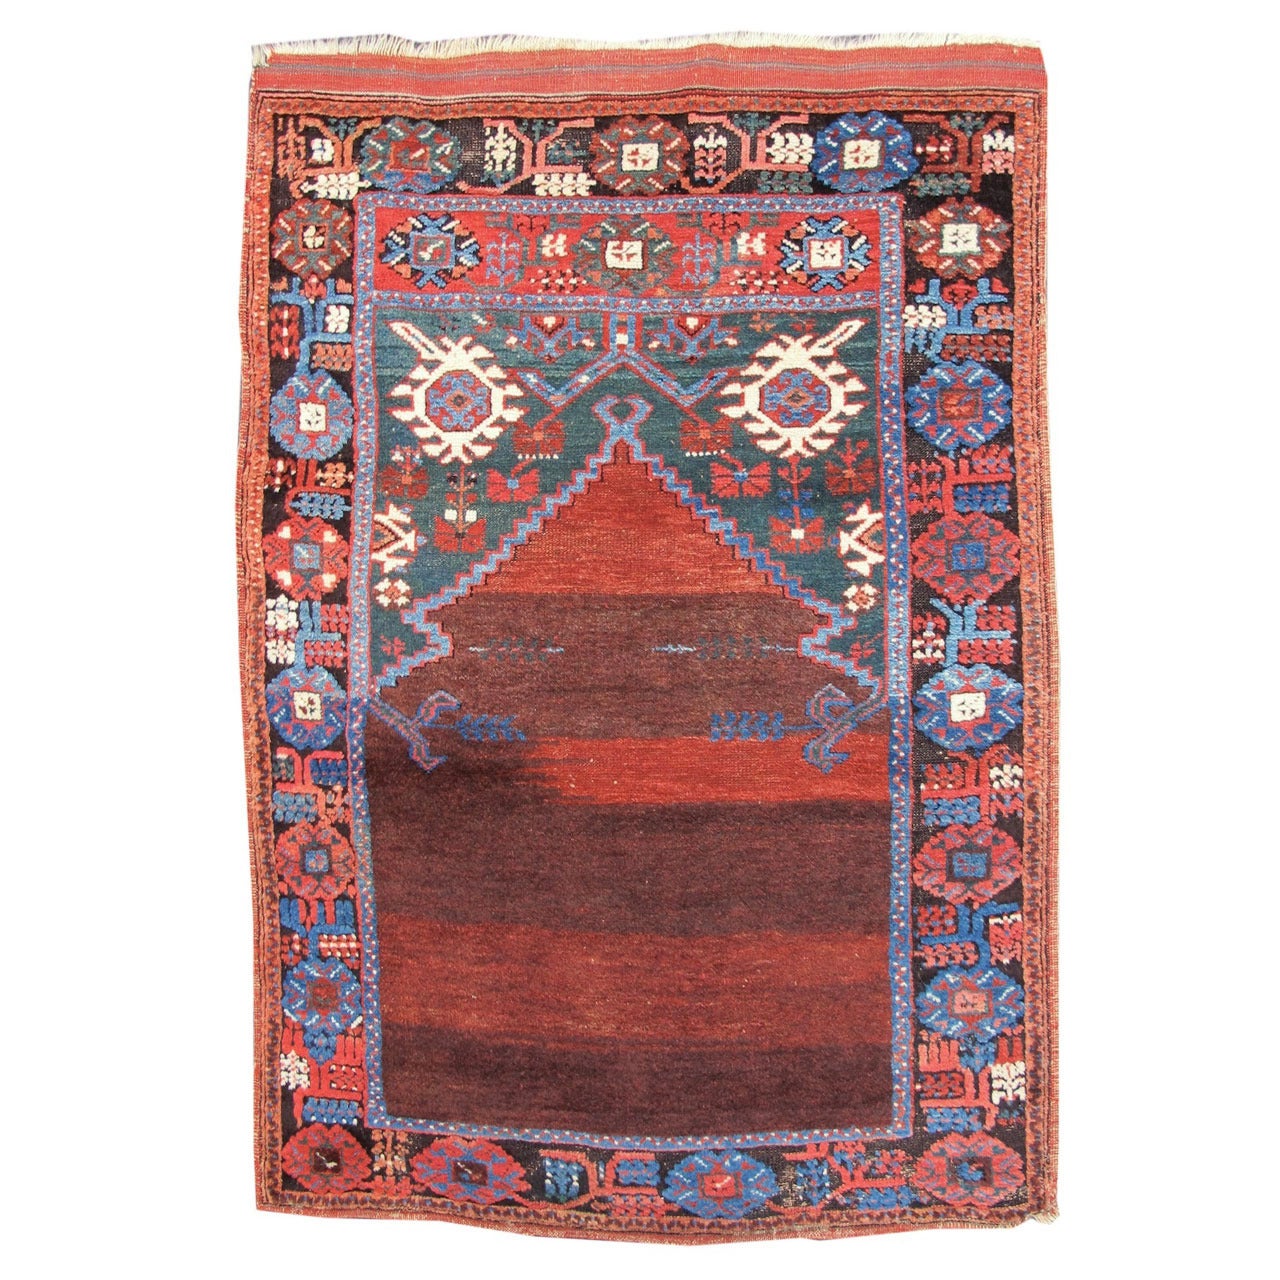 Late 19th Century Red Turkish Karapinar Prayer Rug